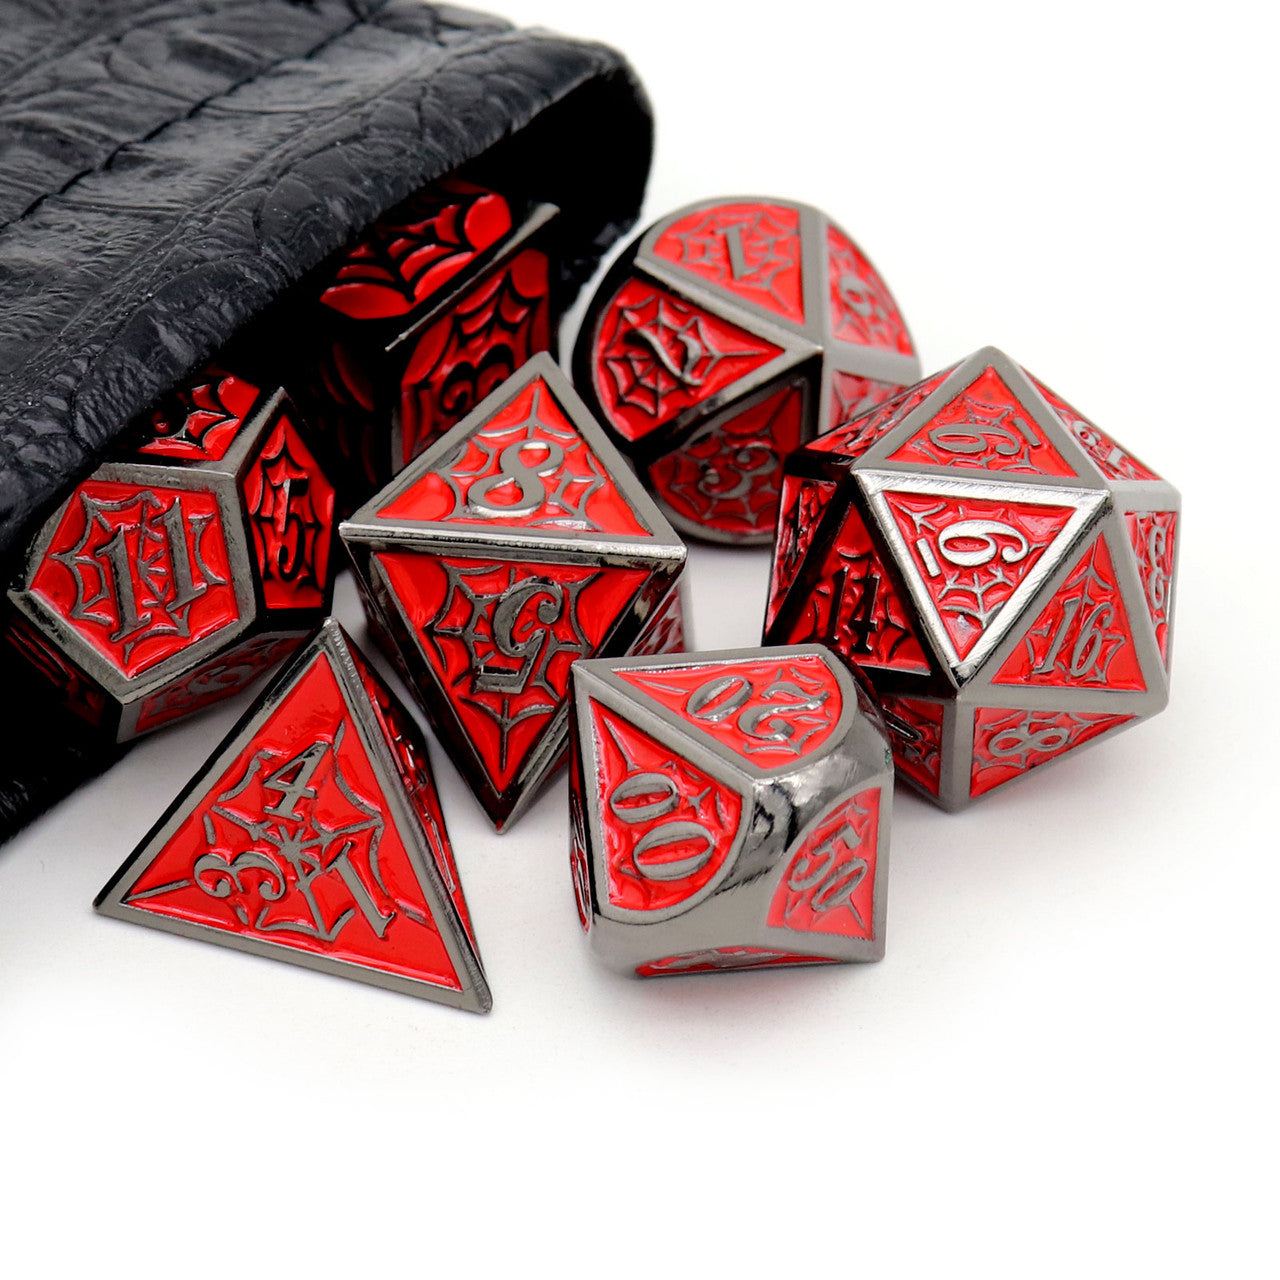 black red dice, black dice, red dice, red metal dice, metal dice black